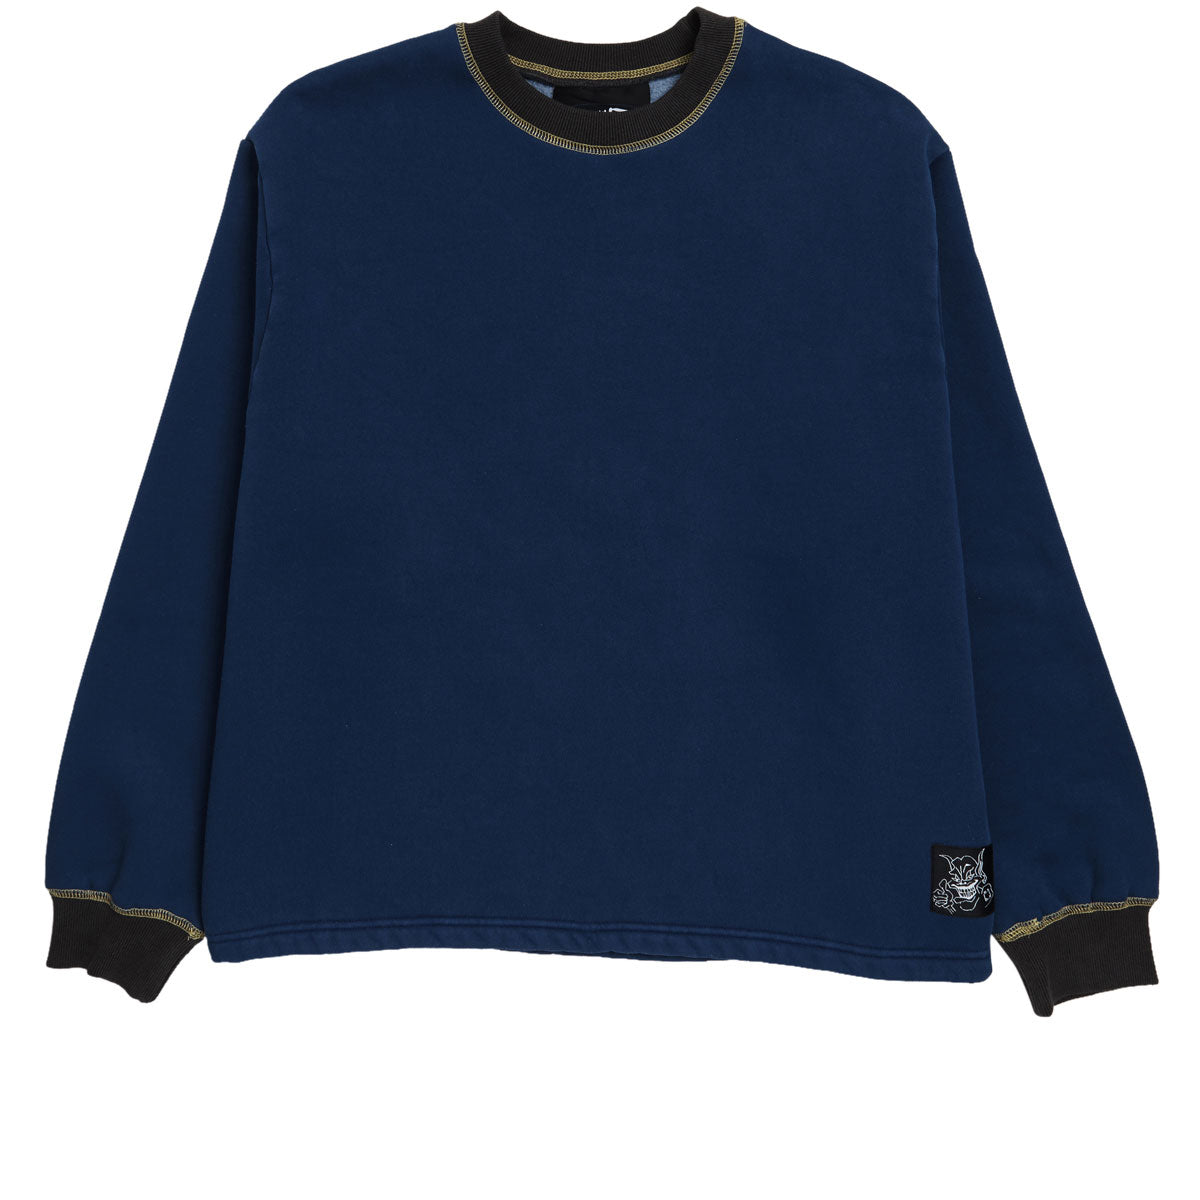 WKND Pigment Jumper Sweatshirt - Blue image 1